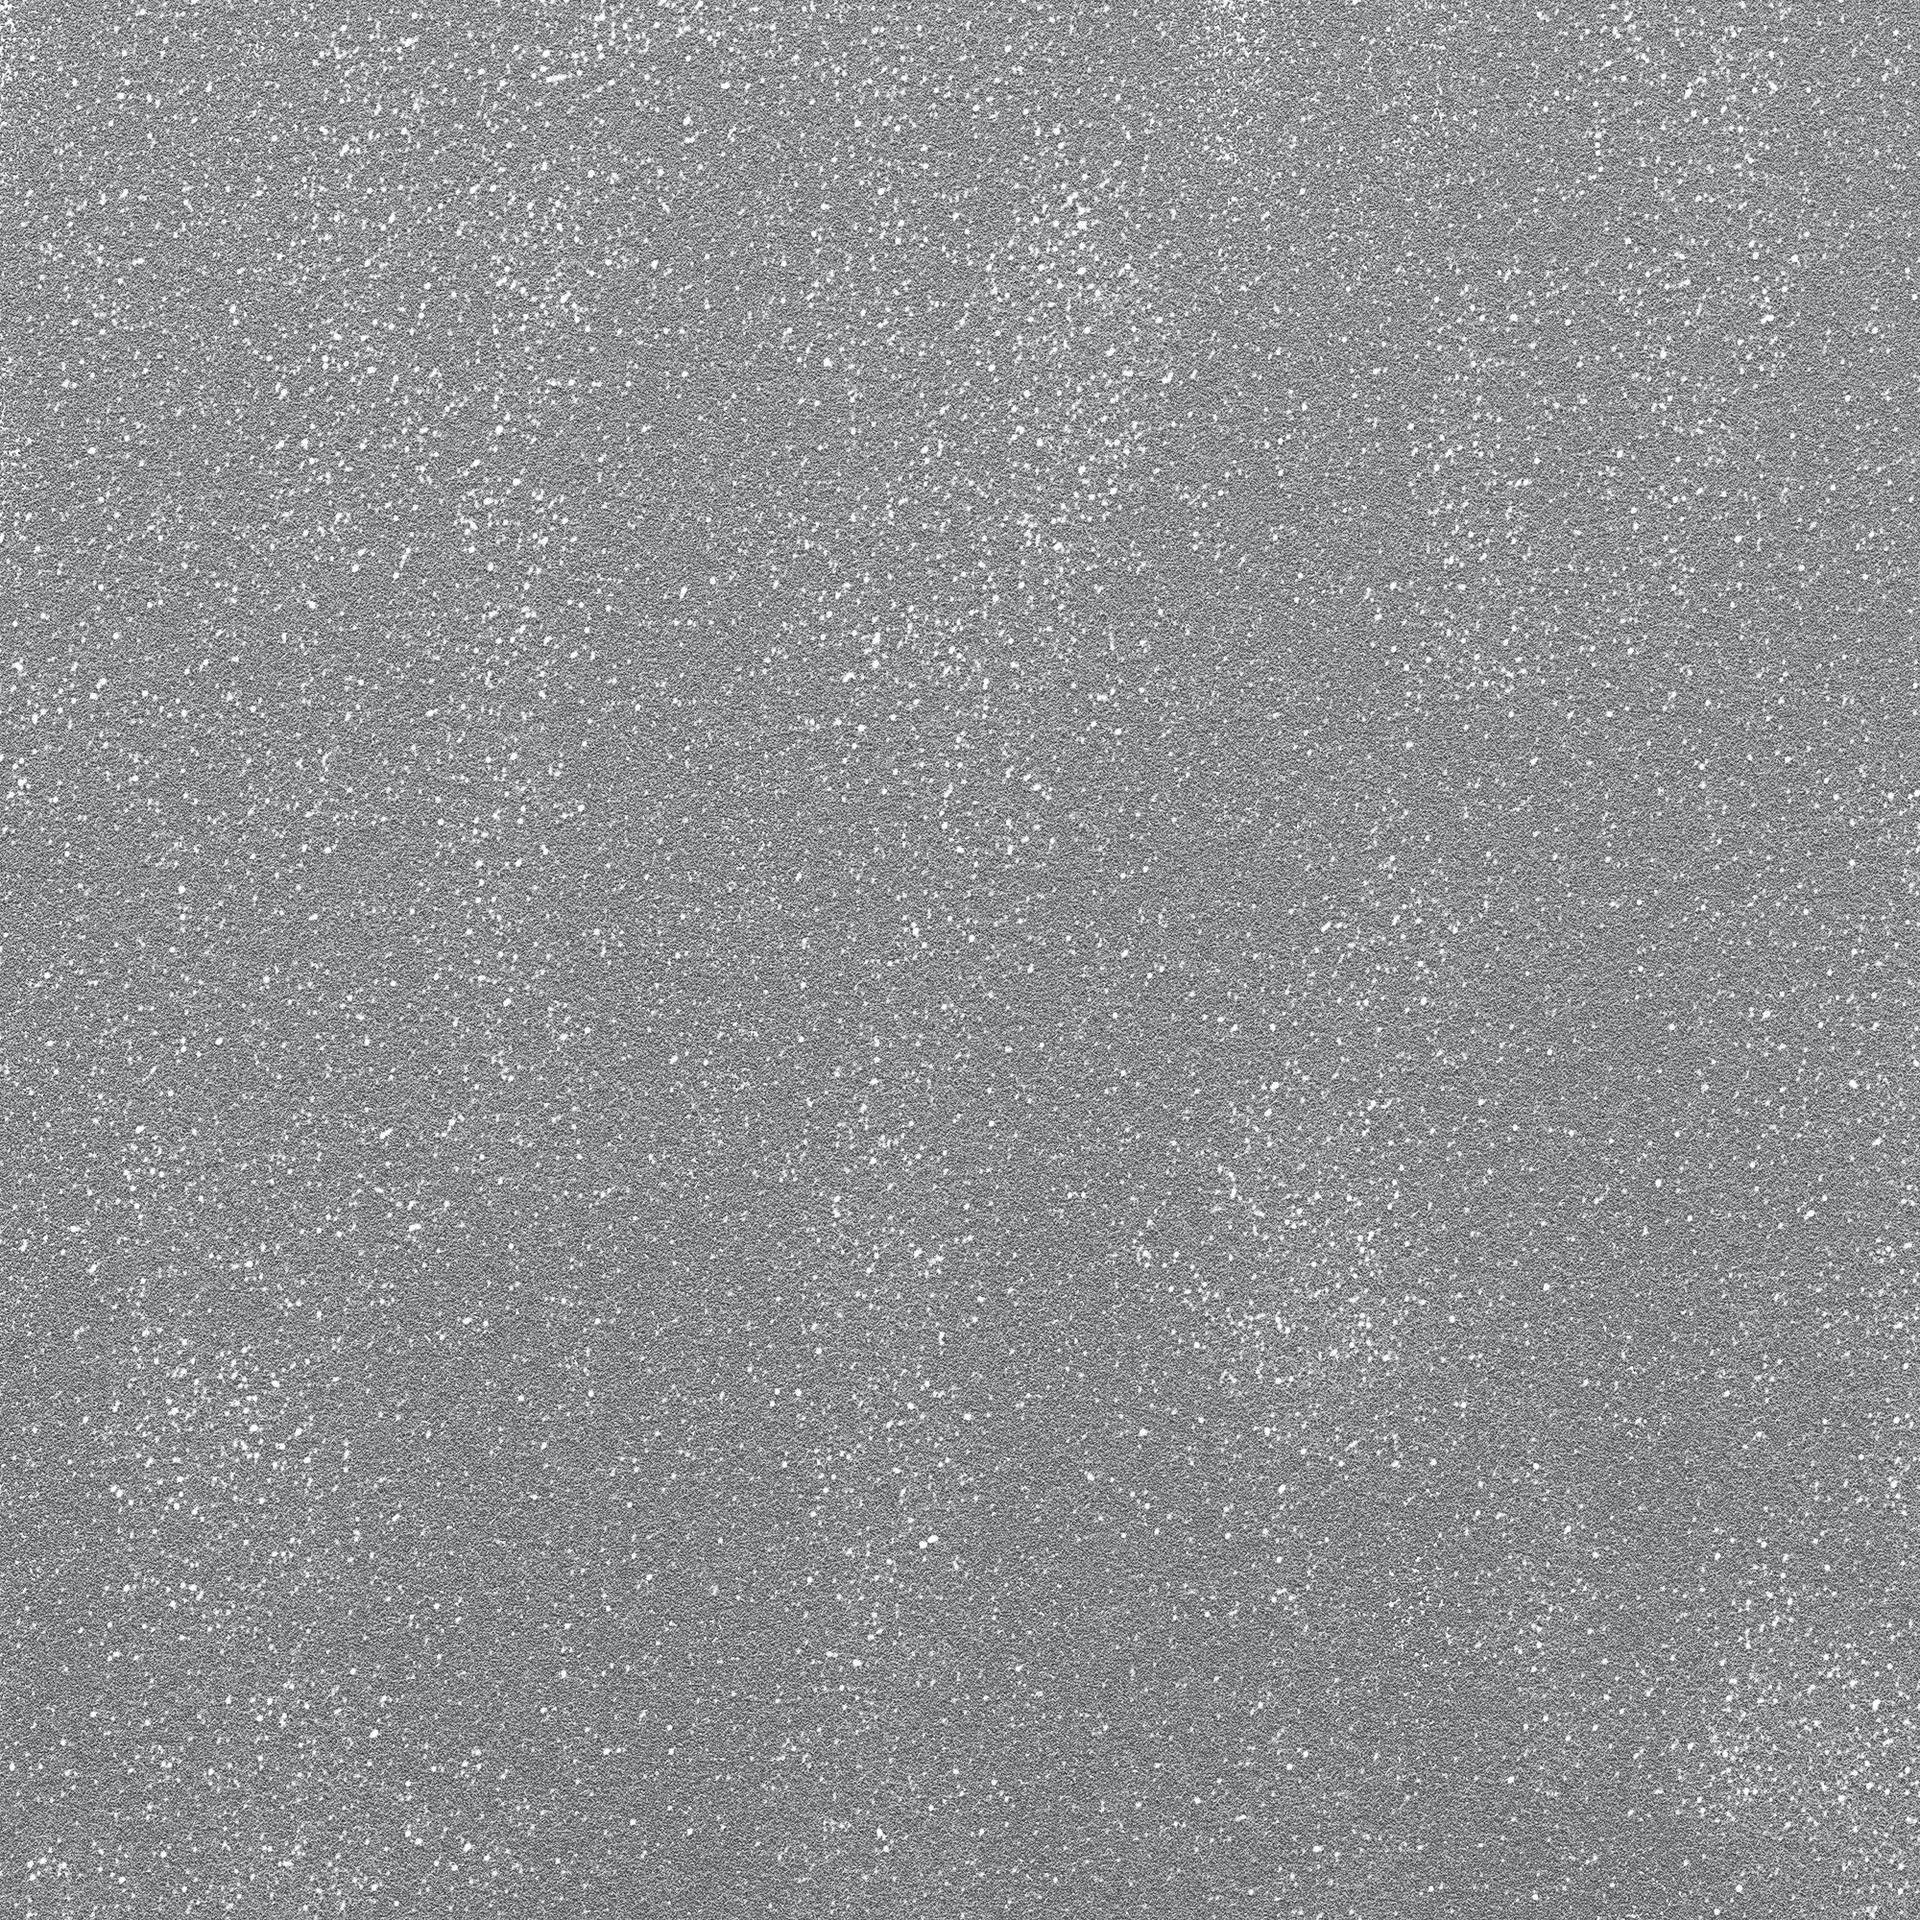 Concrete Texture Gray With White Specs Wallpaper